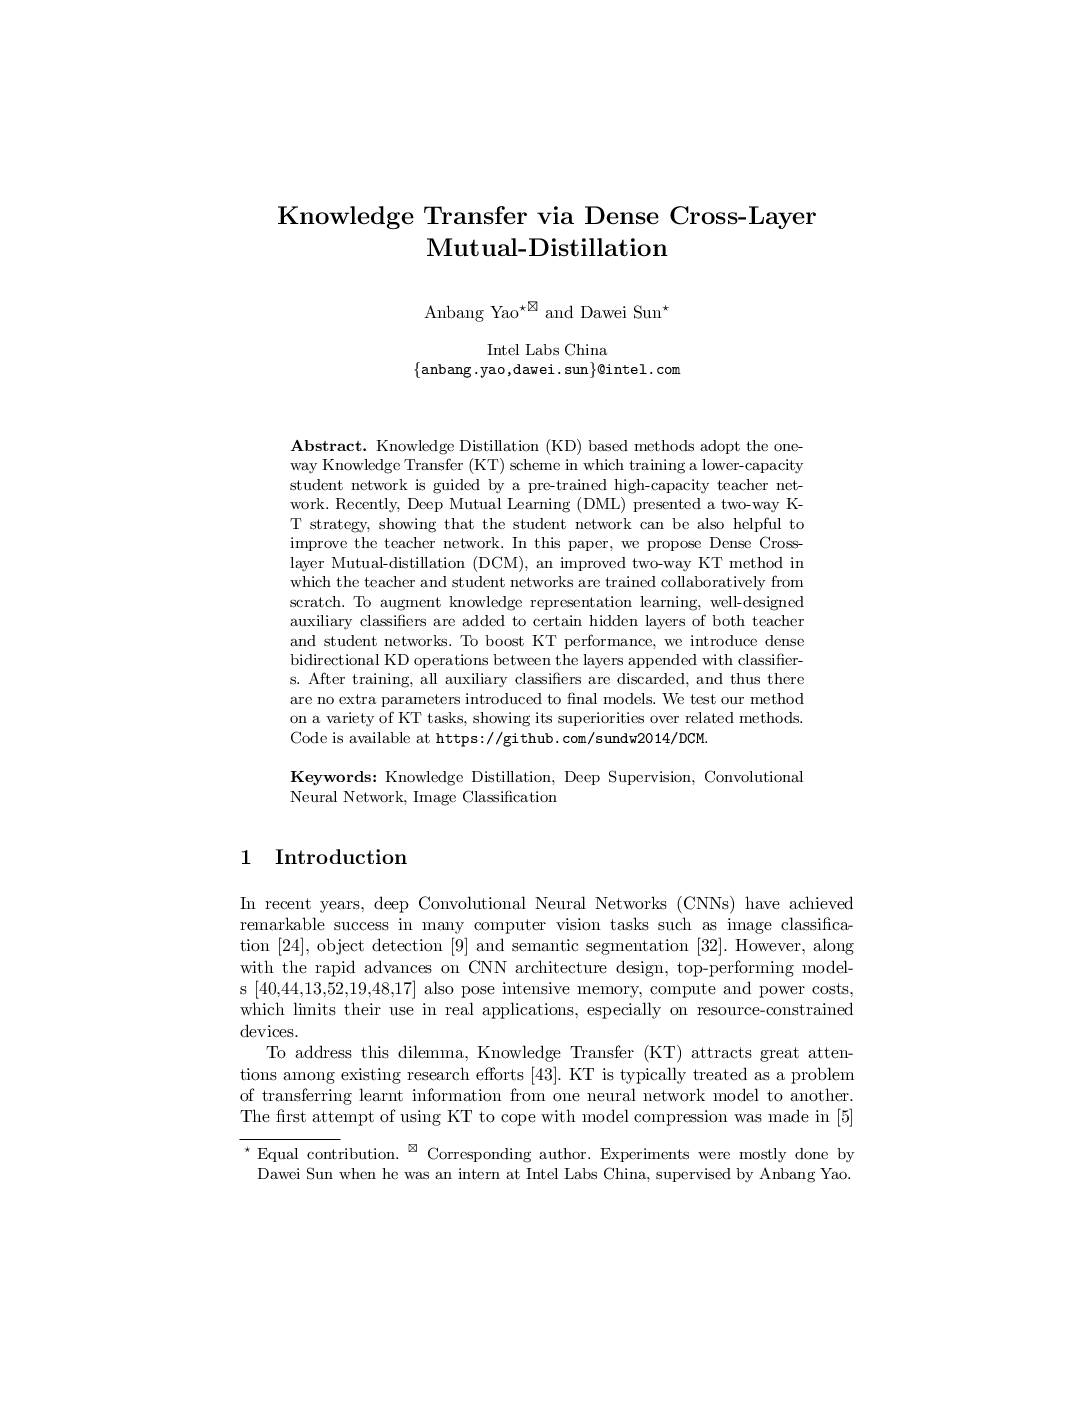 Knowledge Transfer via Dense Cross-layer Mutual-distillation